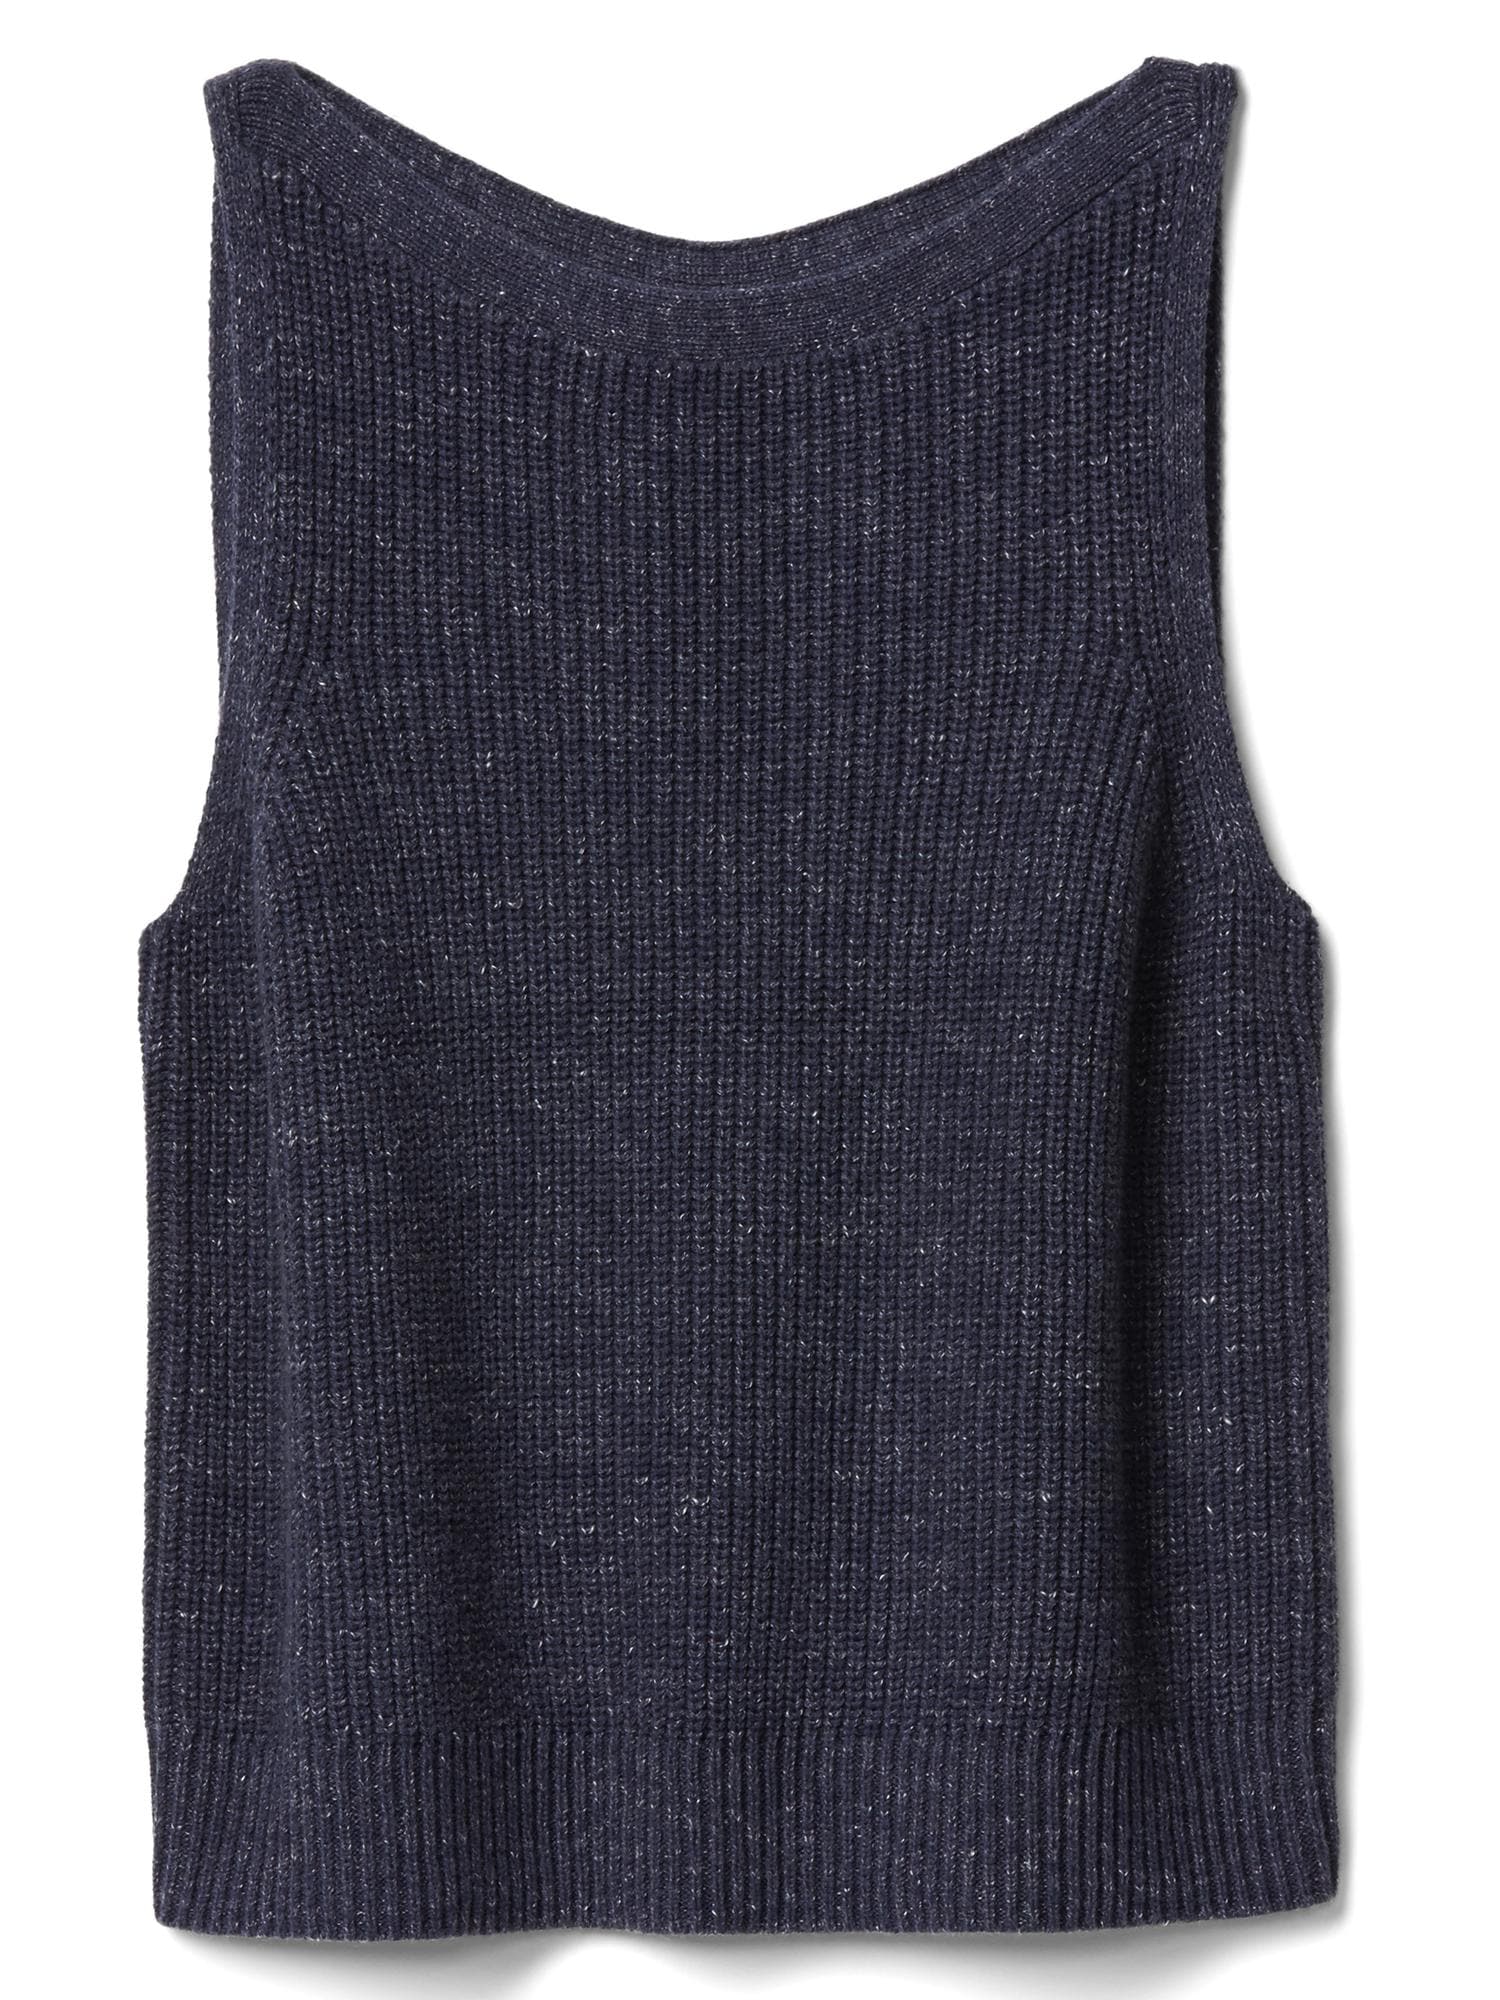 Sleeveless keyhole sweater tank | Gap